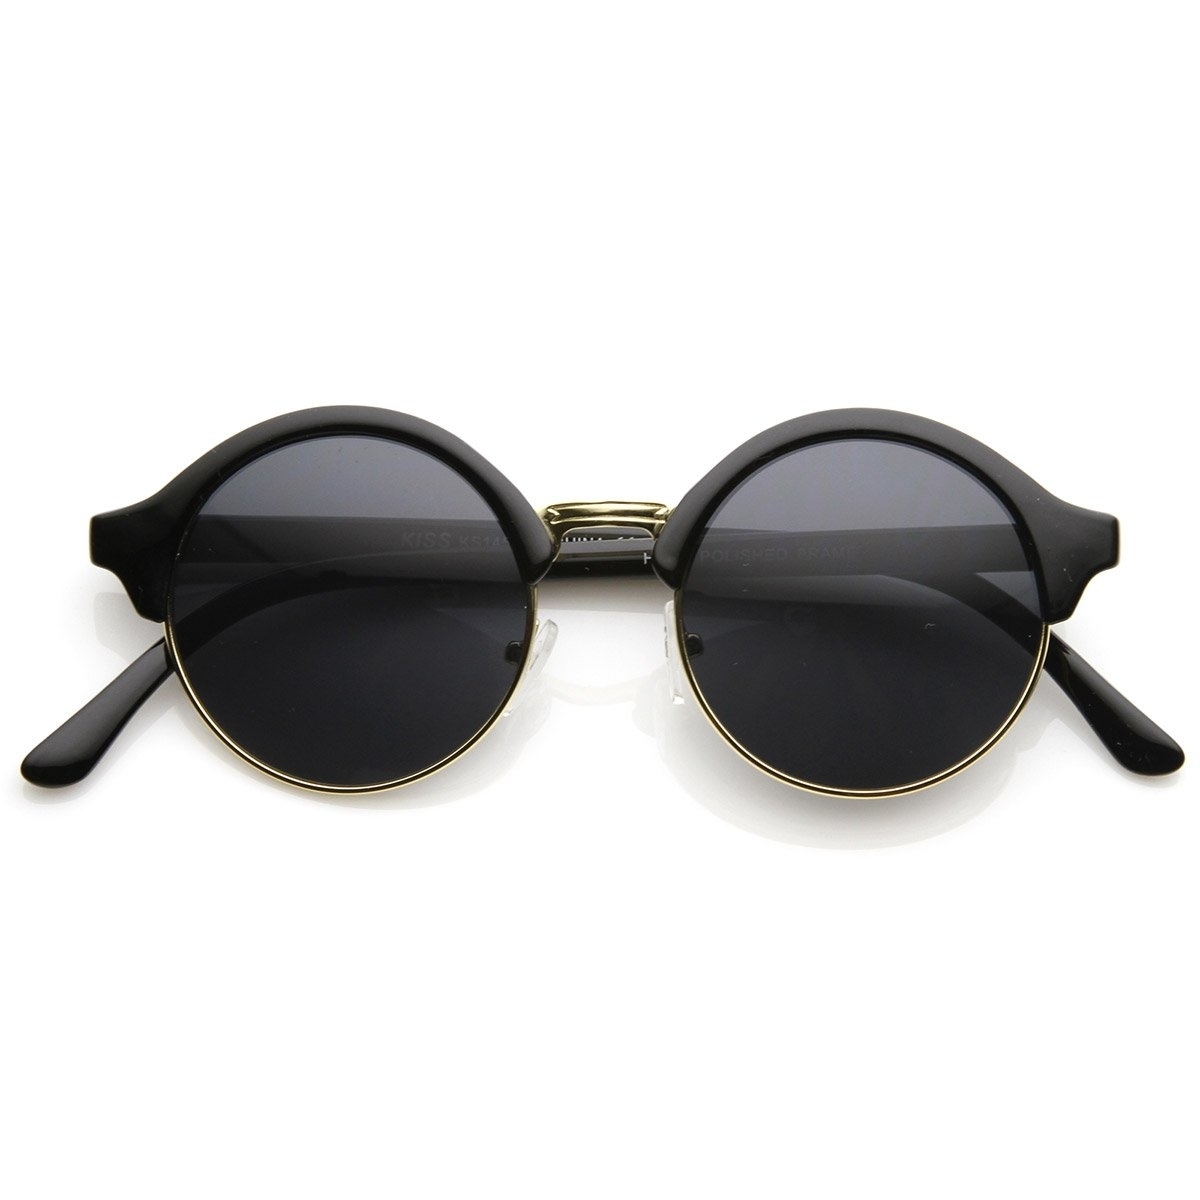 Vintage Inspired Classic Half Frame Semi-Rimless Round Circle Sunglasses - Black-Gold Lavender